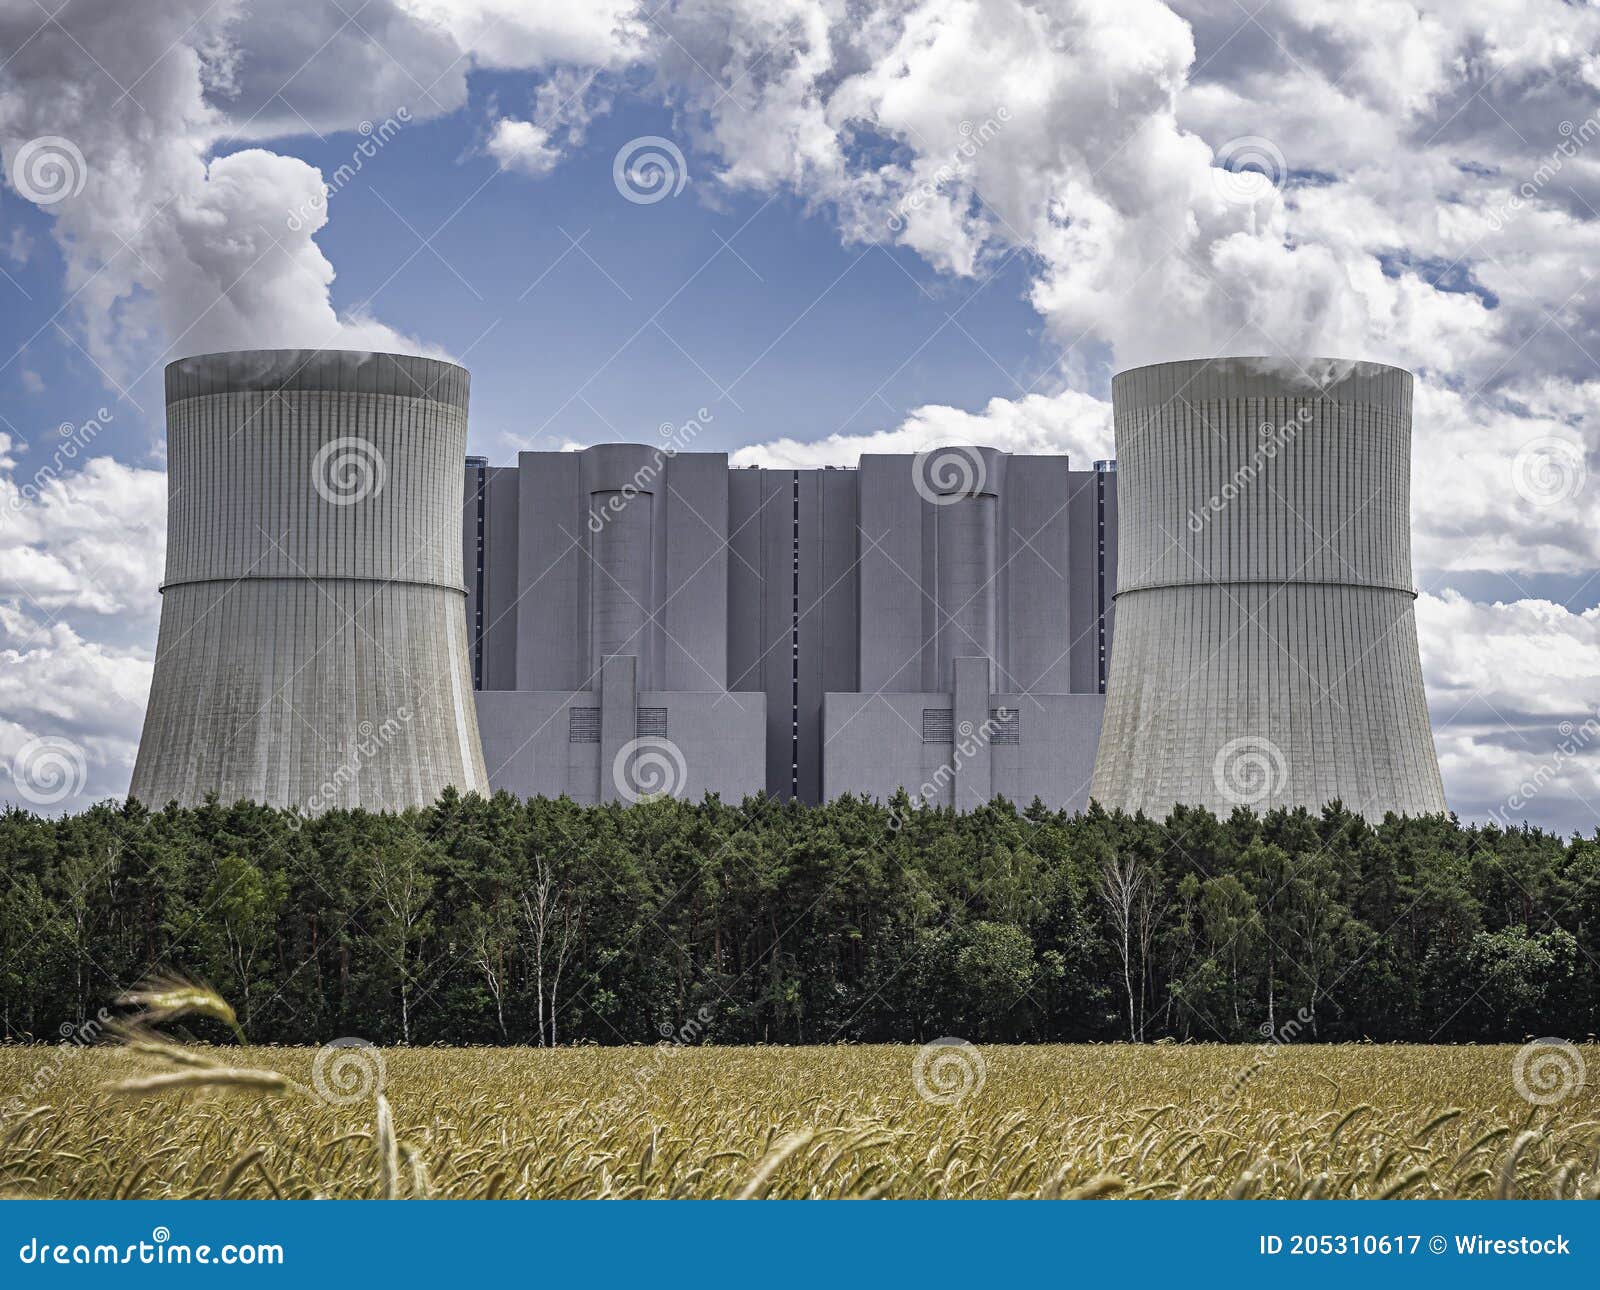 Power Station Schwarze Pumpe Stock Image - Image change, german: 205310617